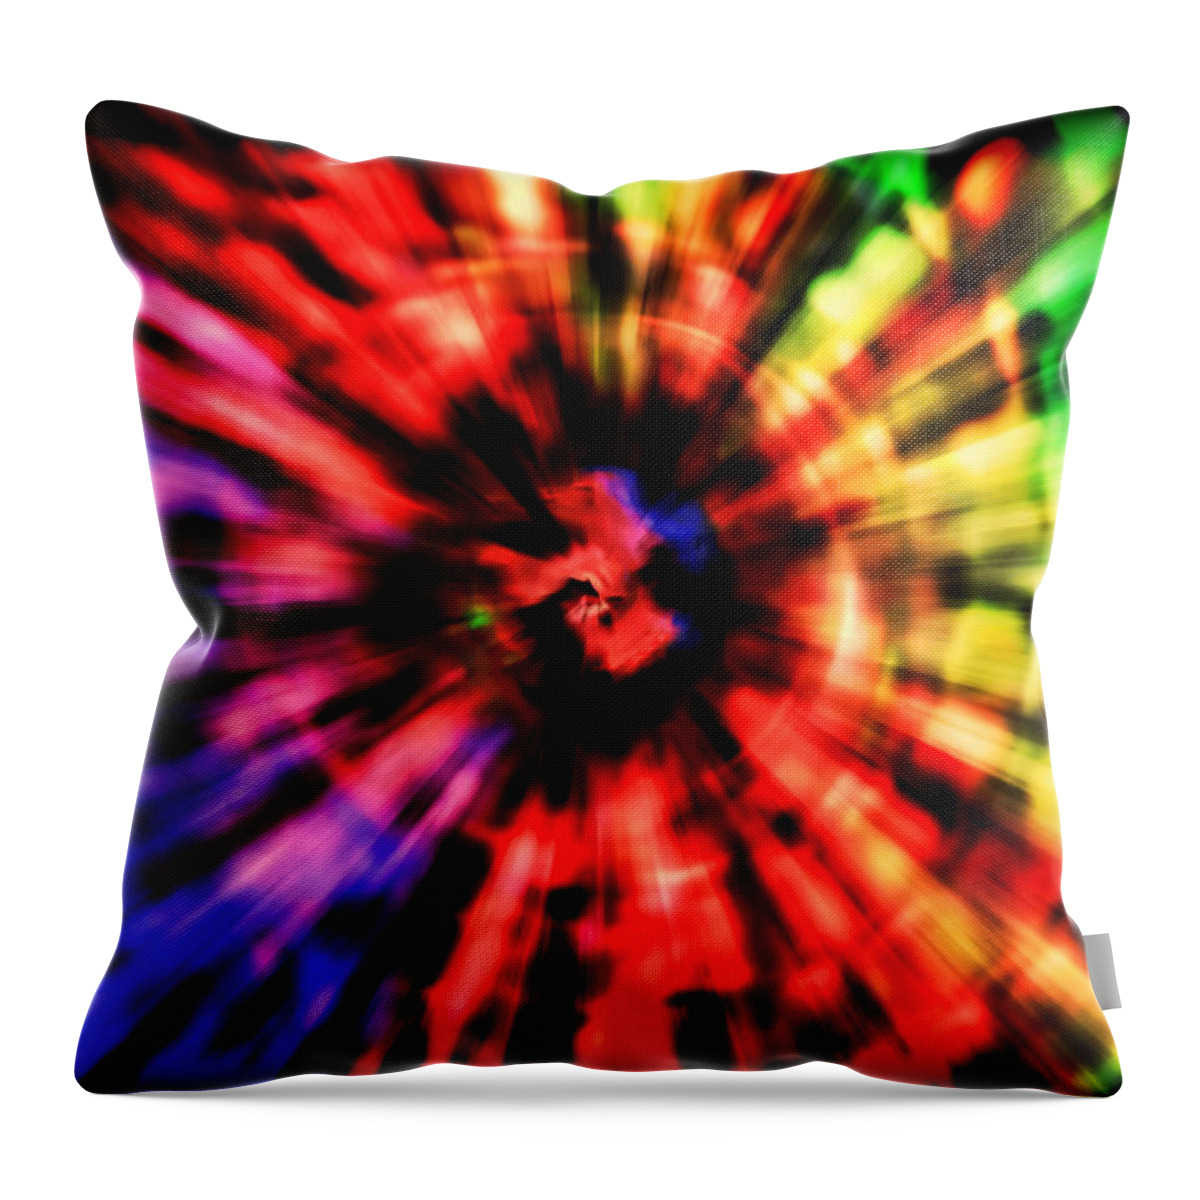 Spectrum Throw Pillow featuring the photograph Spectrum Vortex by EXparte SE